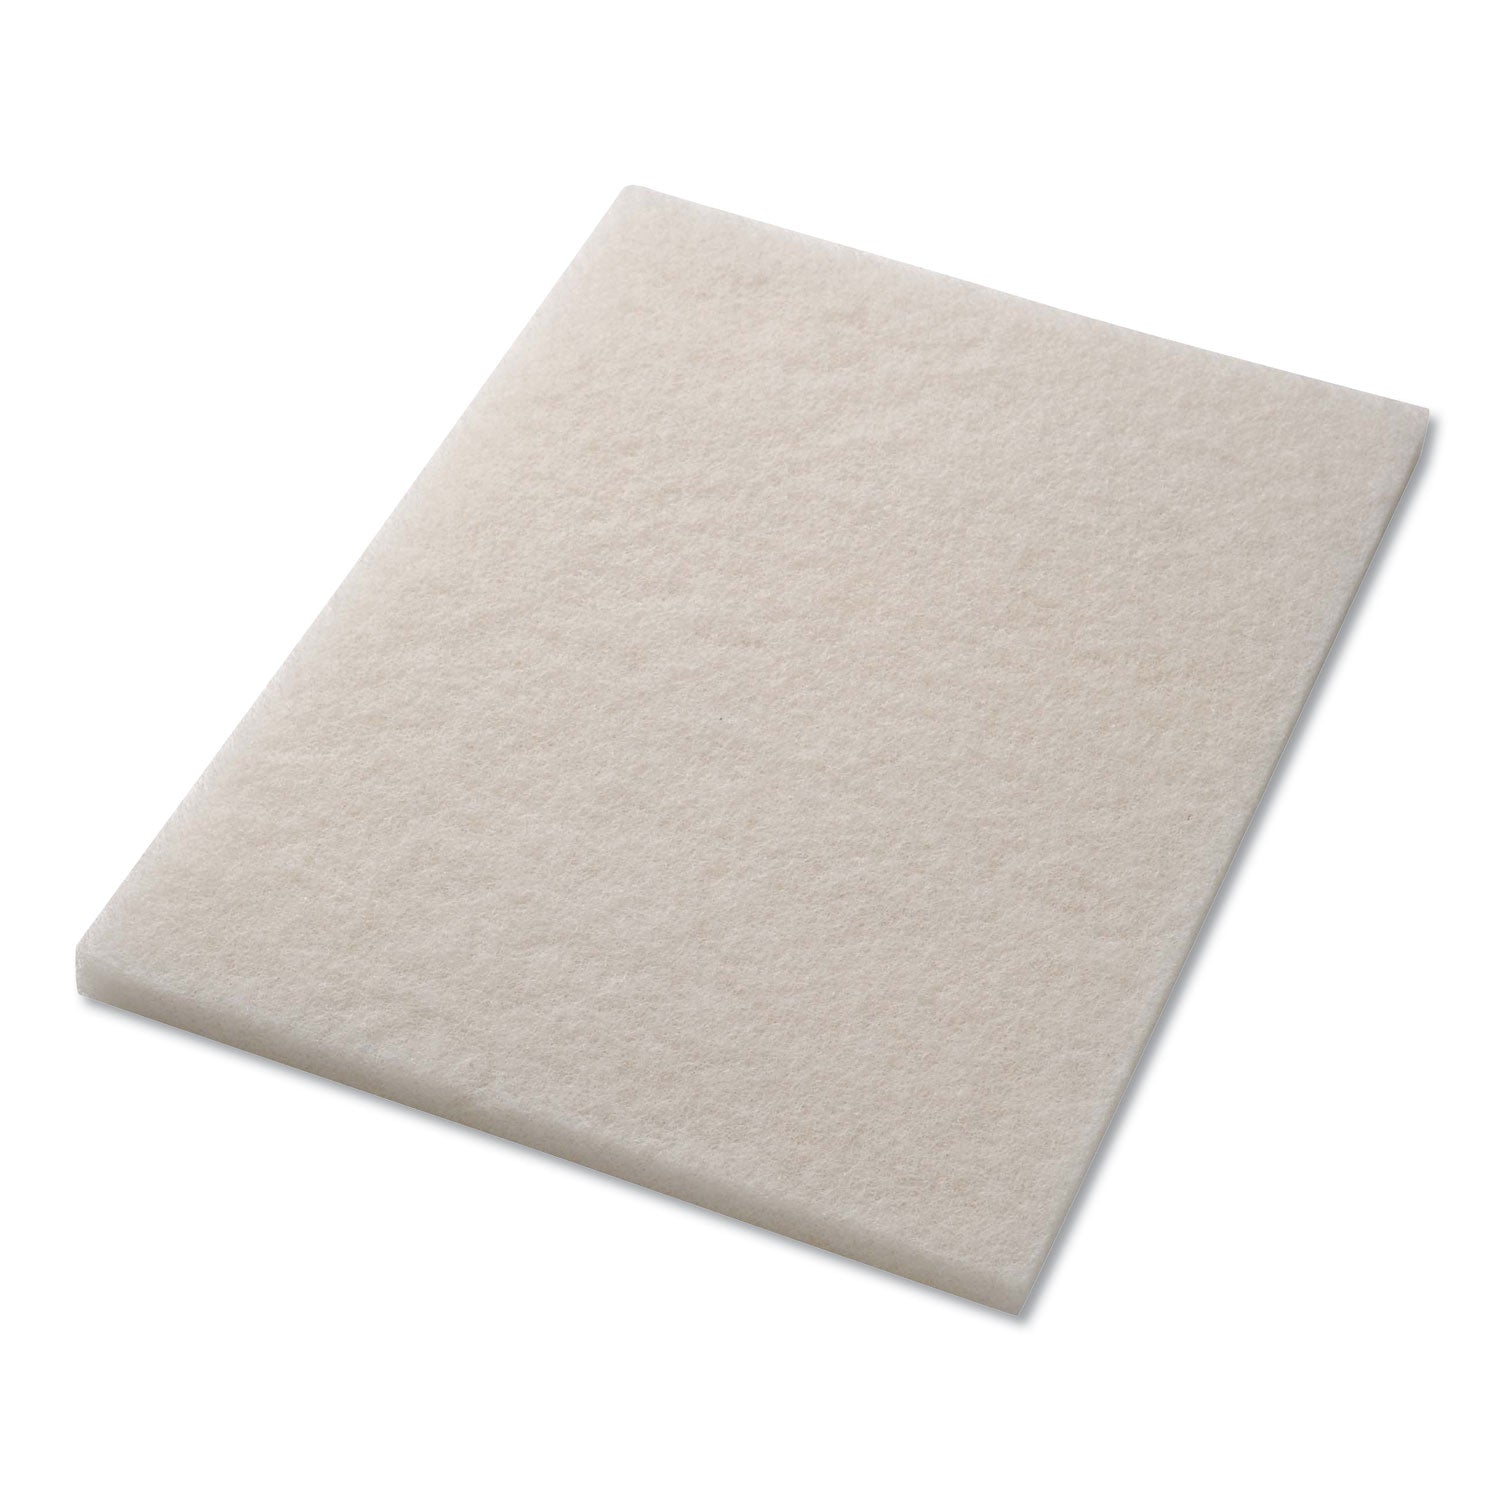 polishing-pads-14-x-28-white-5-carton_amf40121428 - 1